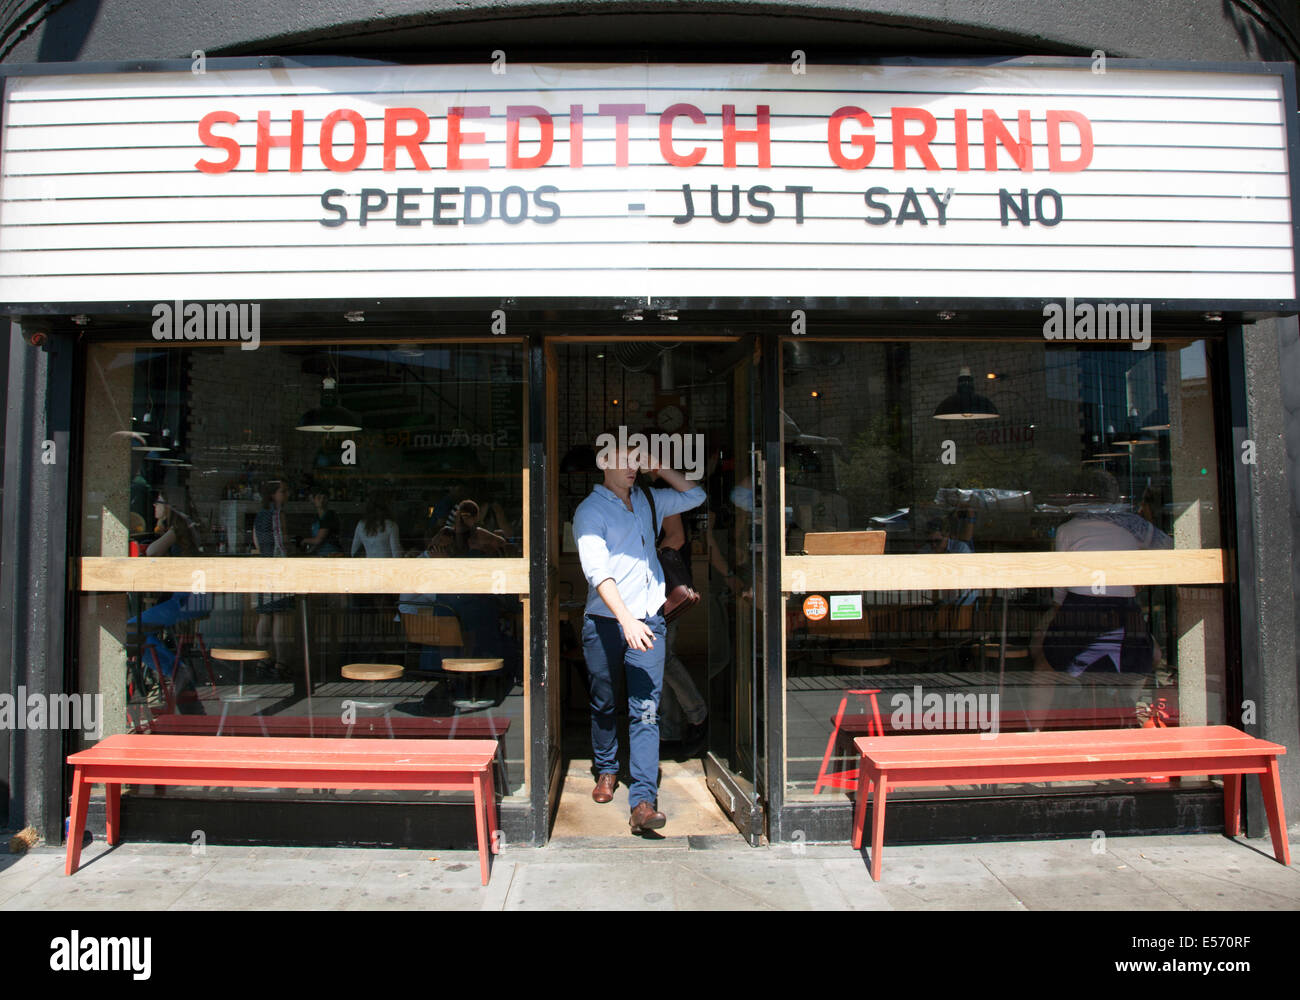 Shoreditch Grind coffee bar, Old Street, London Stock Photo